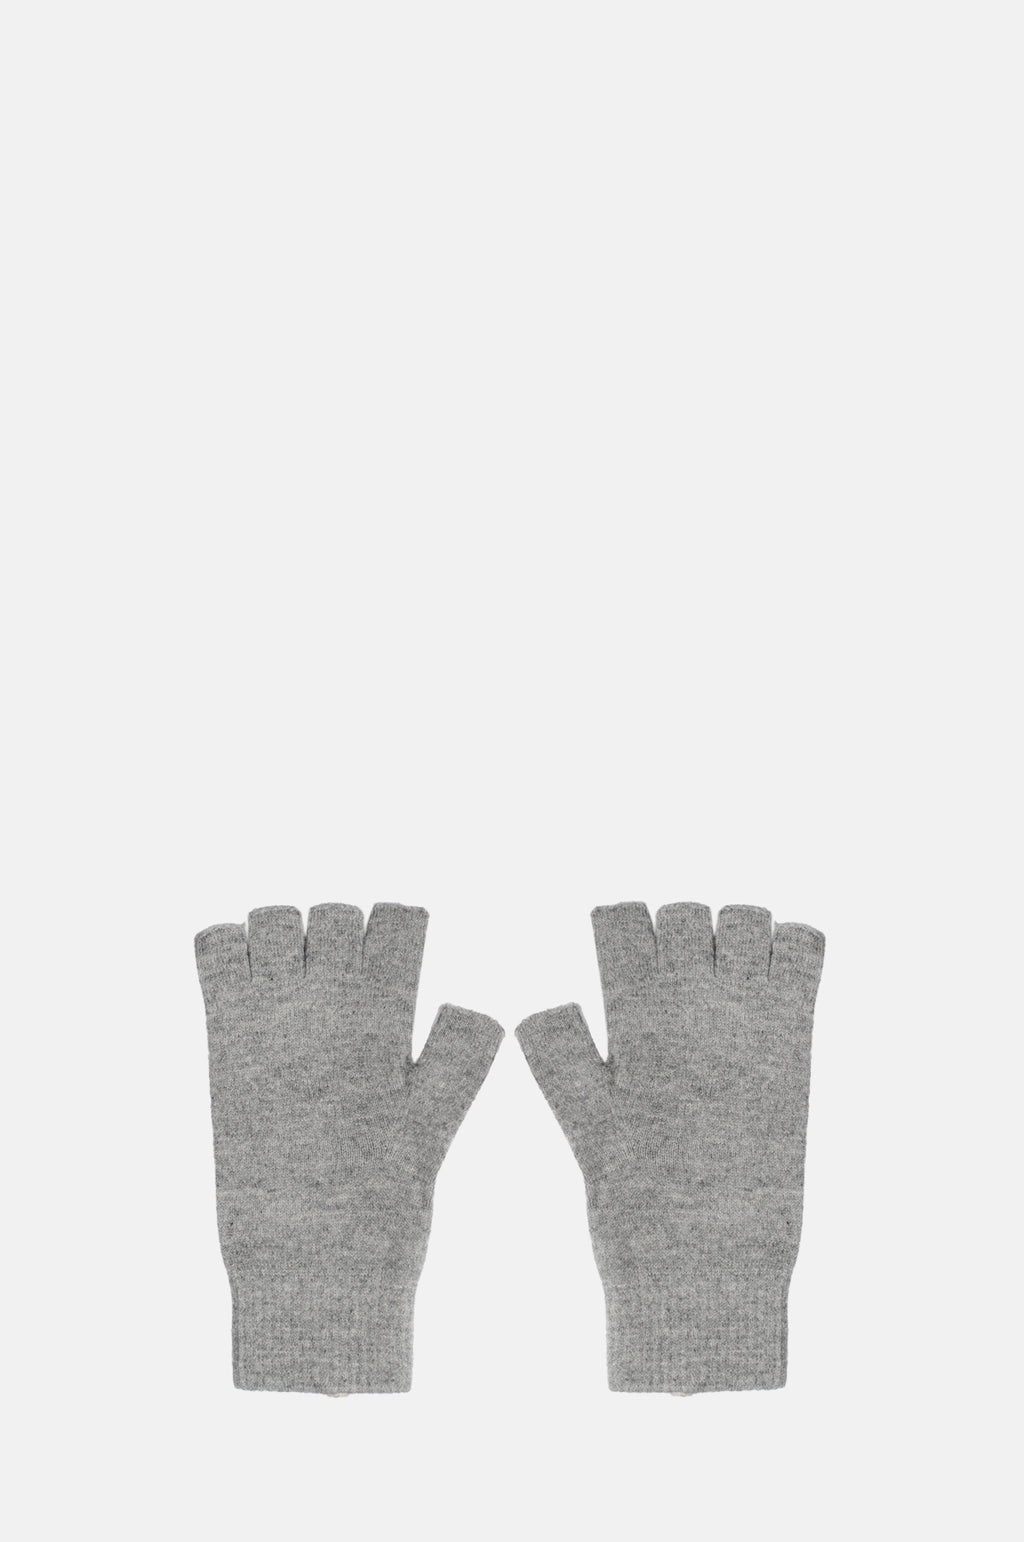 The Jumper 1234 fingerless gloves in mid grey.